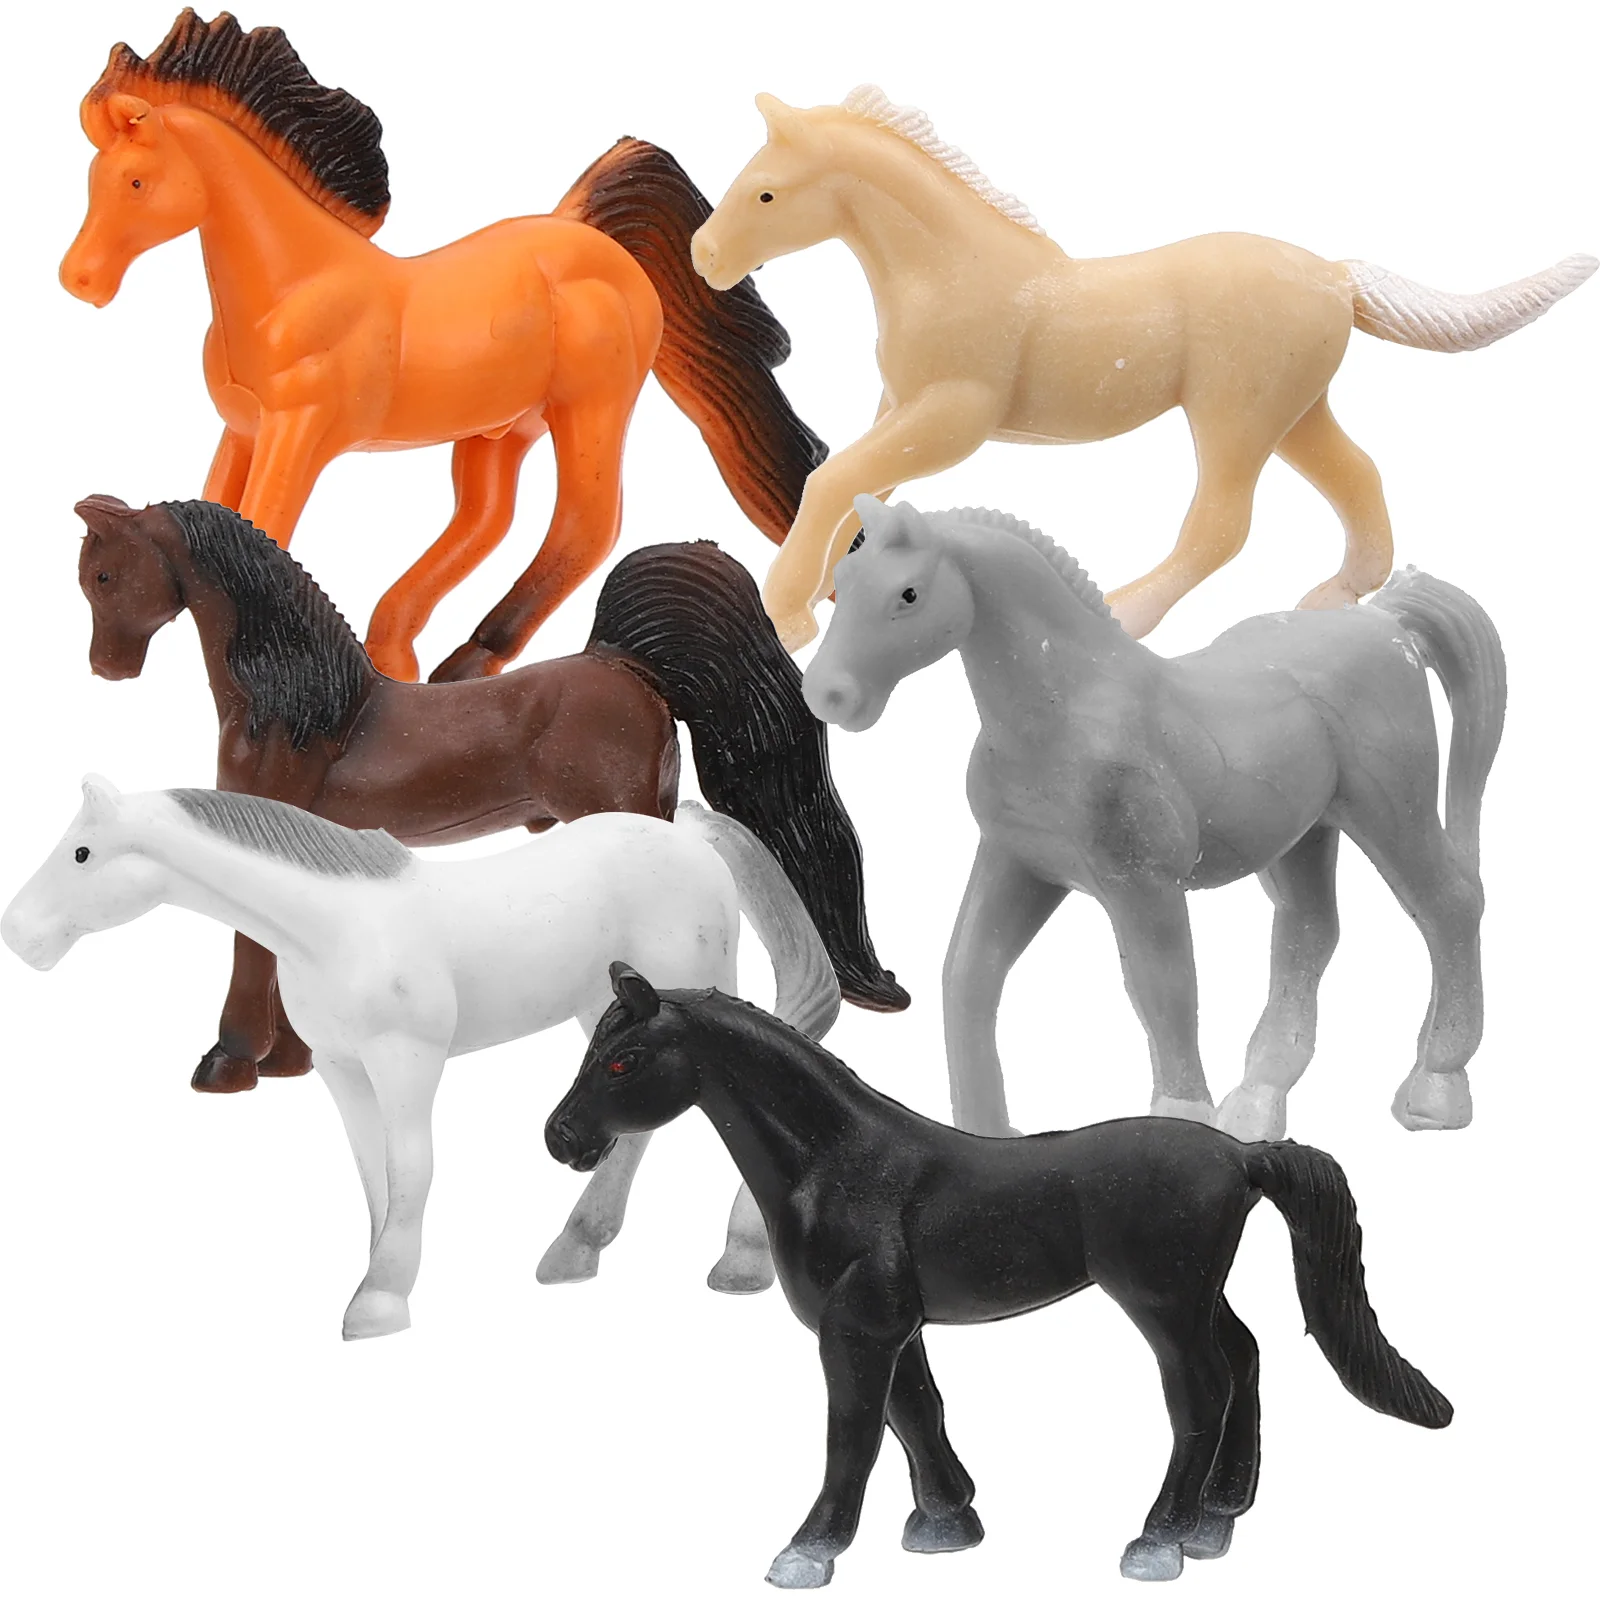 

12 Pcs Miniature Horse Party Favors Animal Figurines Kids Toy Horses Vinyl Tiny Animals Figures Child Toys Girls